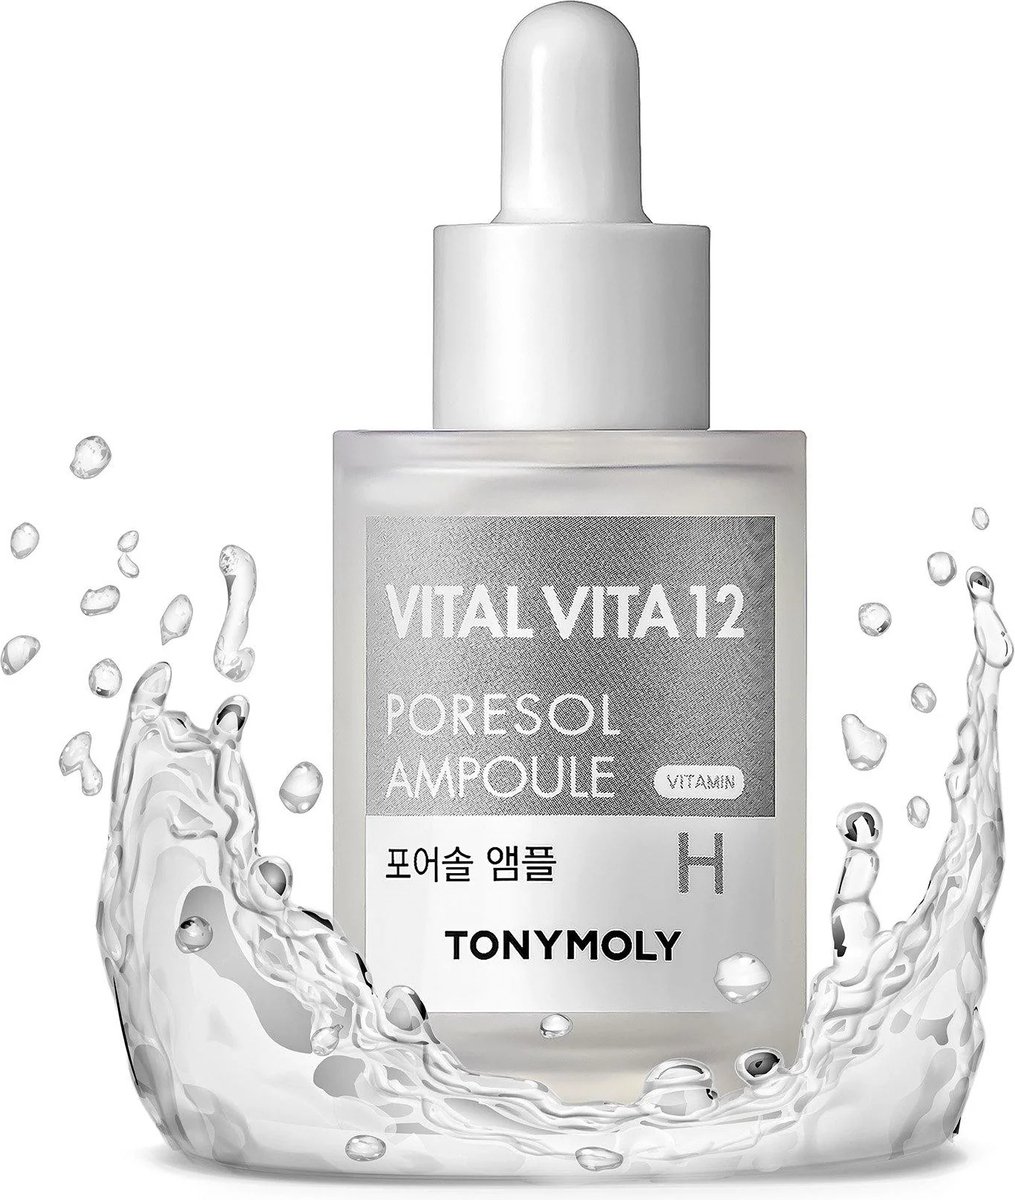 Tonymoly Vital Vita 12 Pore Refining Ampoule 30 ml